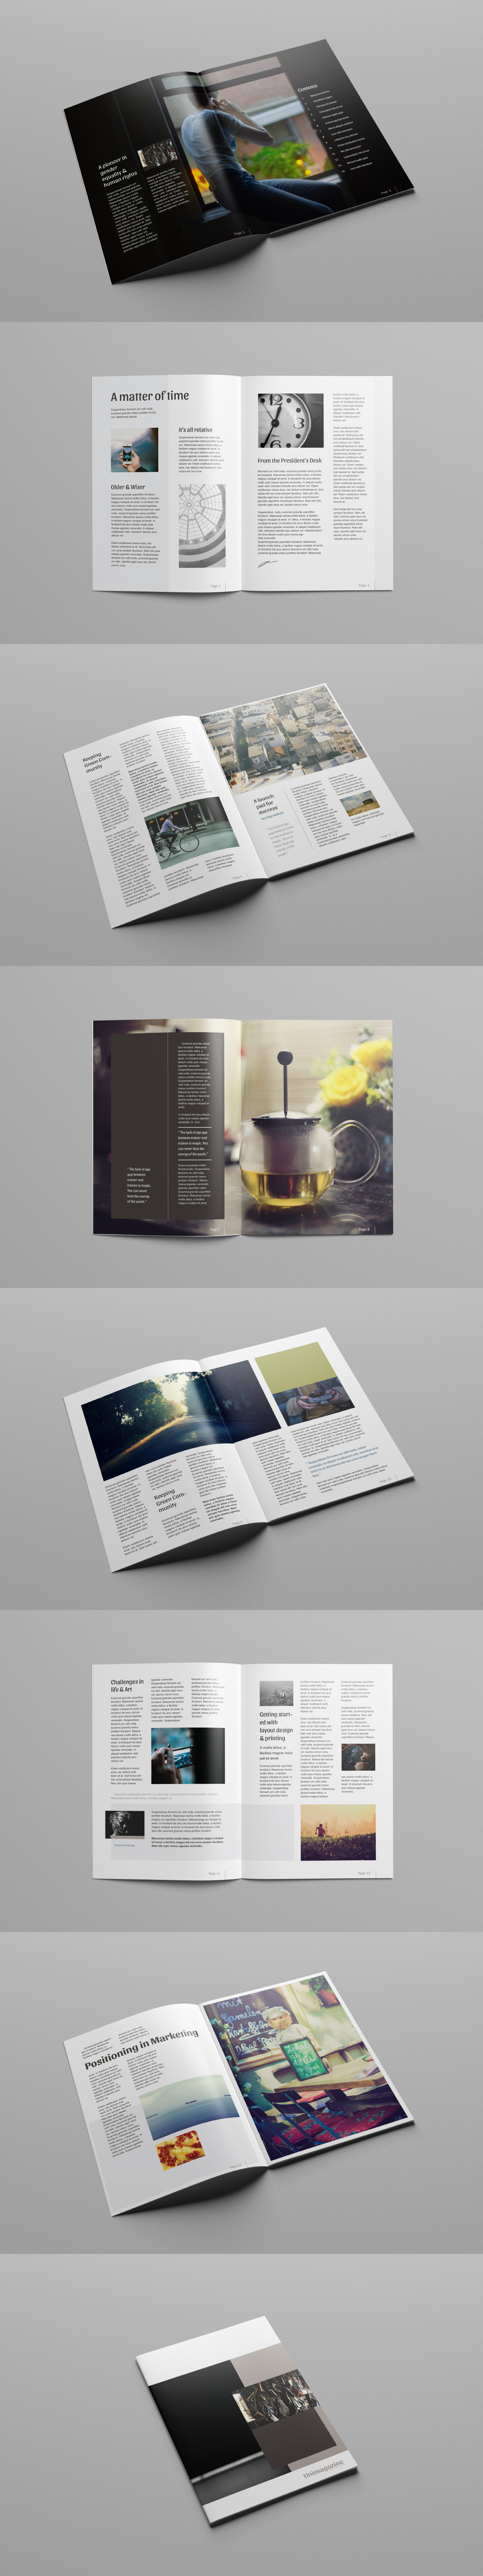 A3现代设计风格杂志设计模板 Modern Magazine Template插图